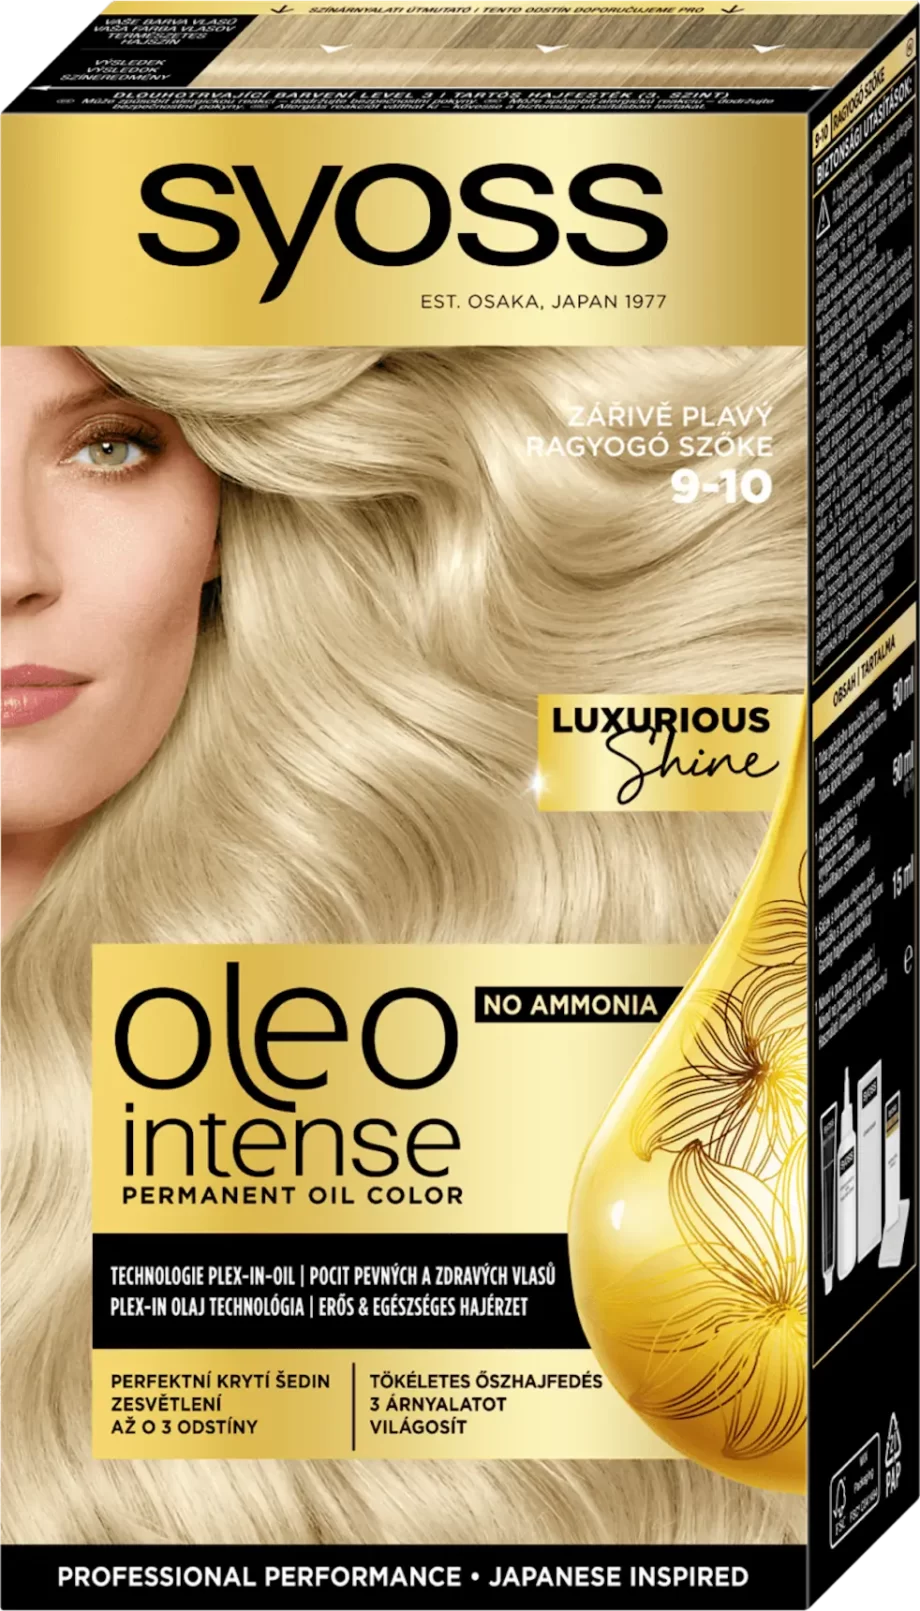 syoss oleo intense 9-10 bright blonde permanent oil color